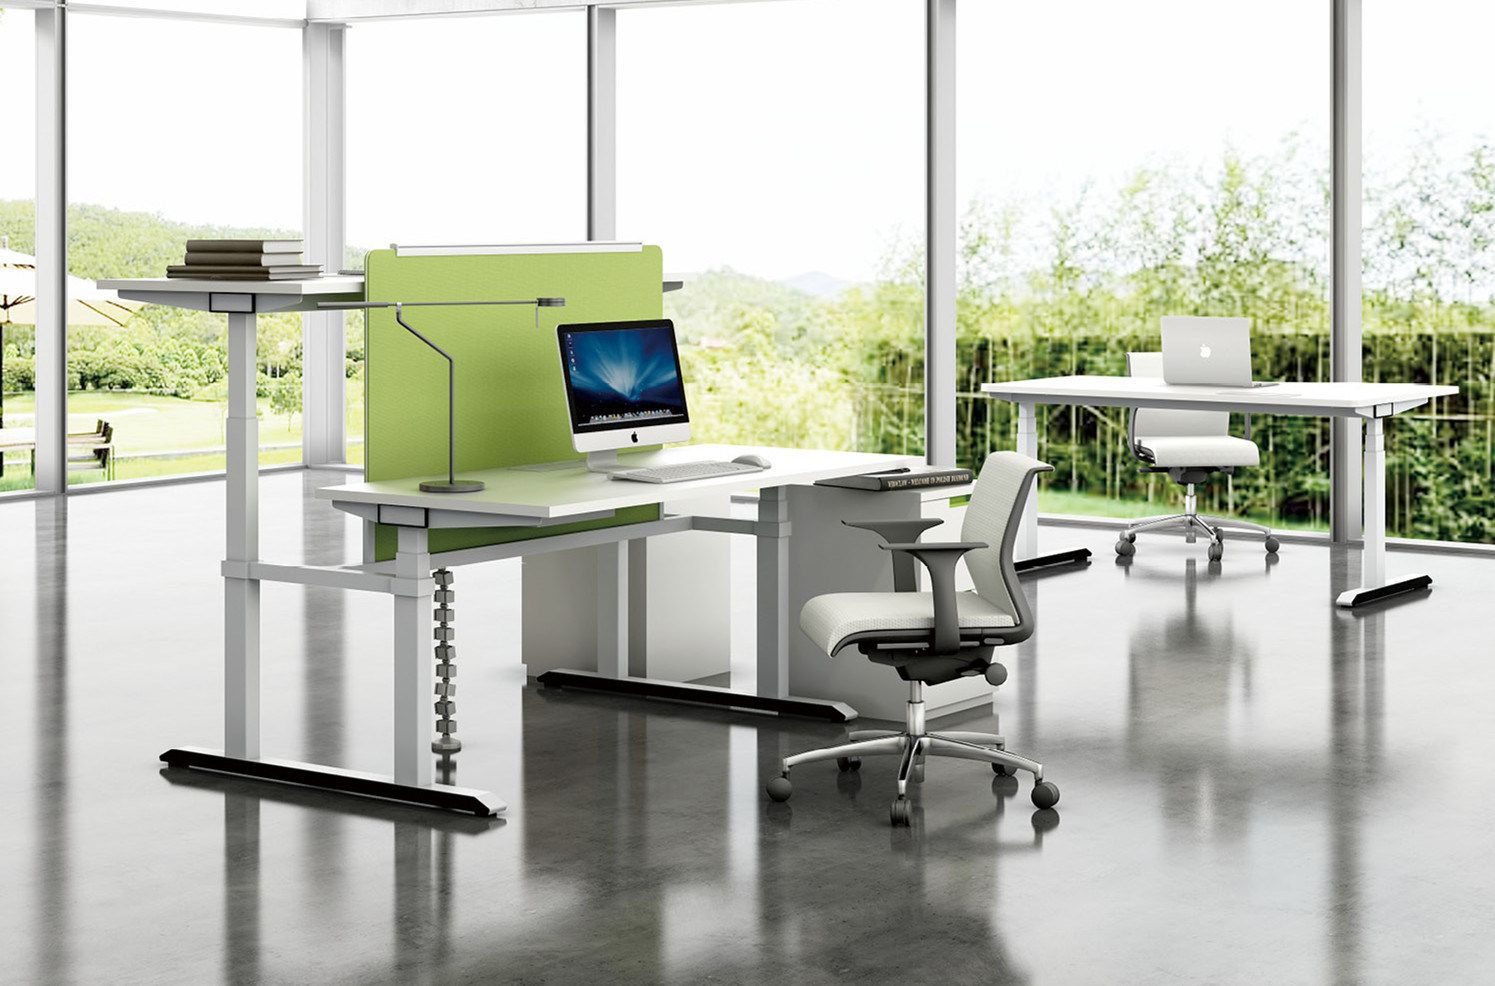 Modern Popular Melamine Electric Height Adjustable Office Table (HF-YZT032)